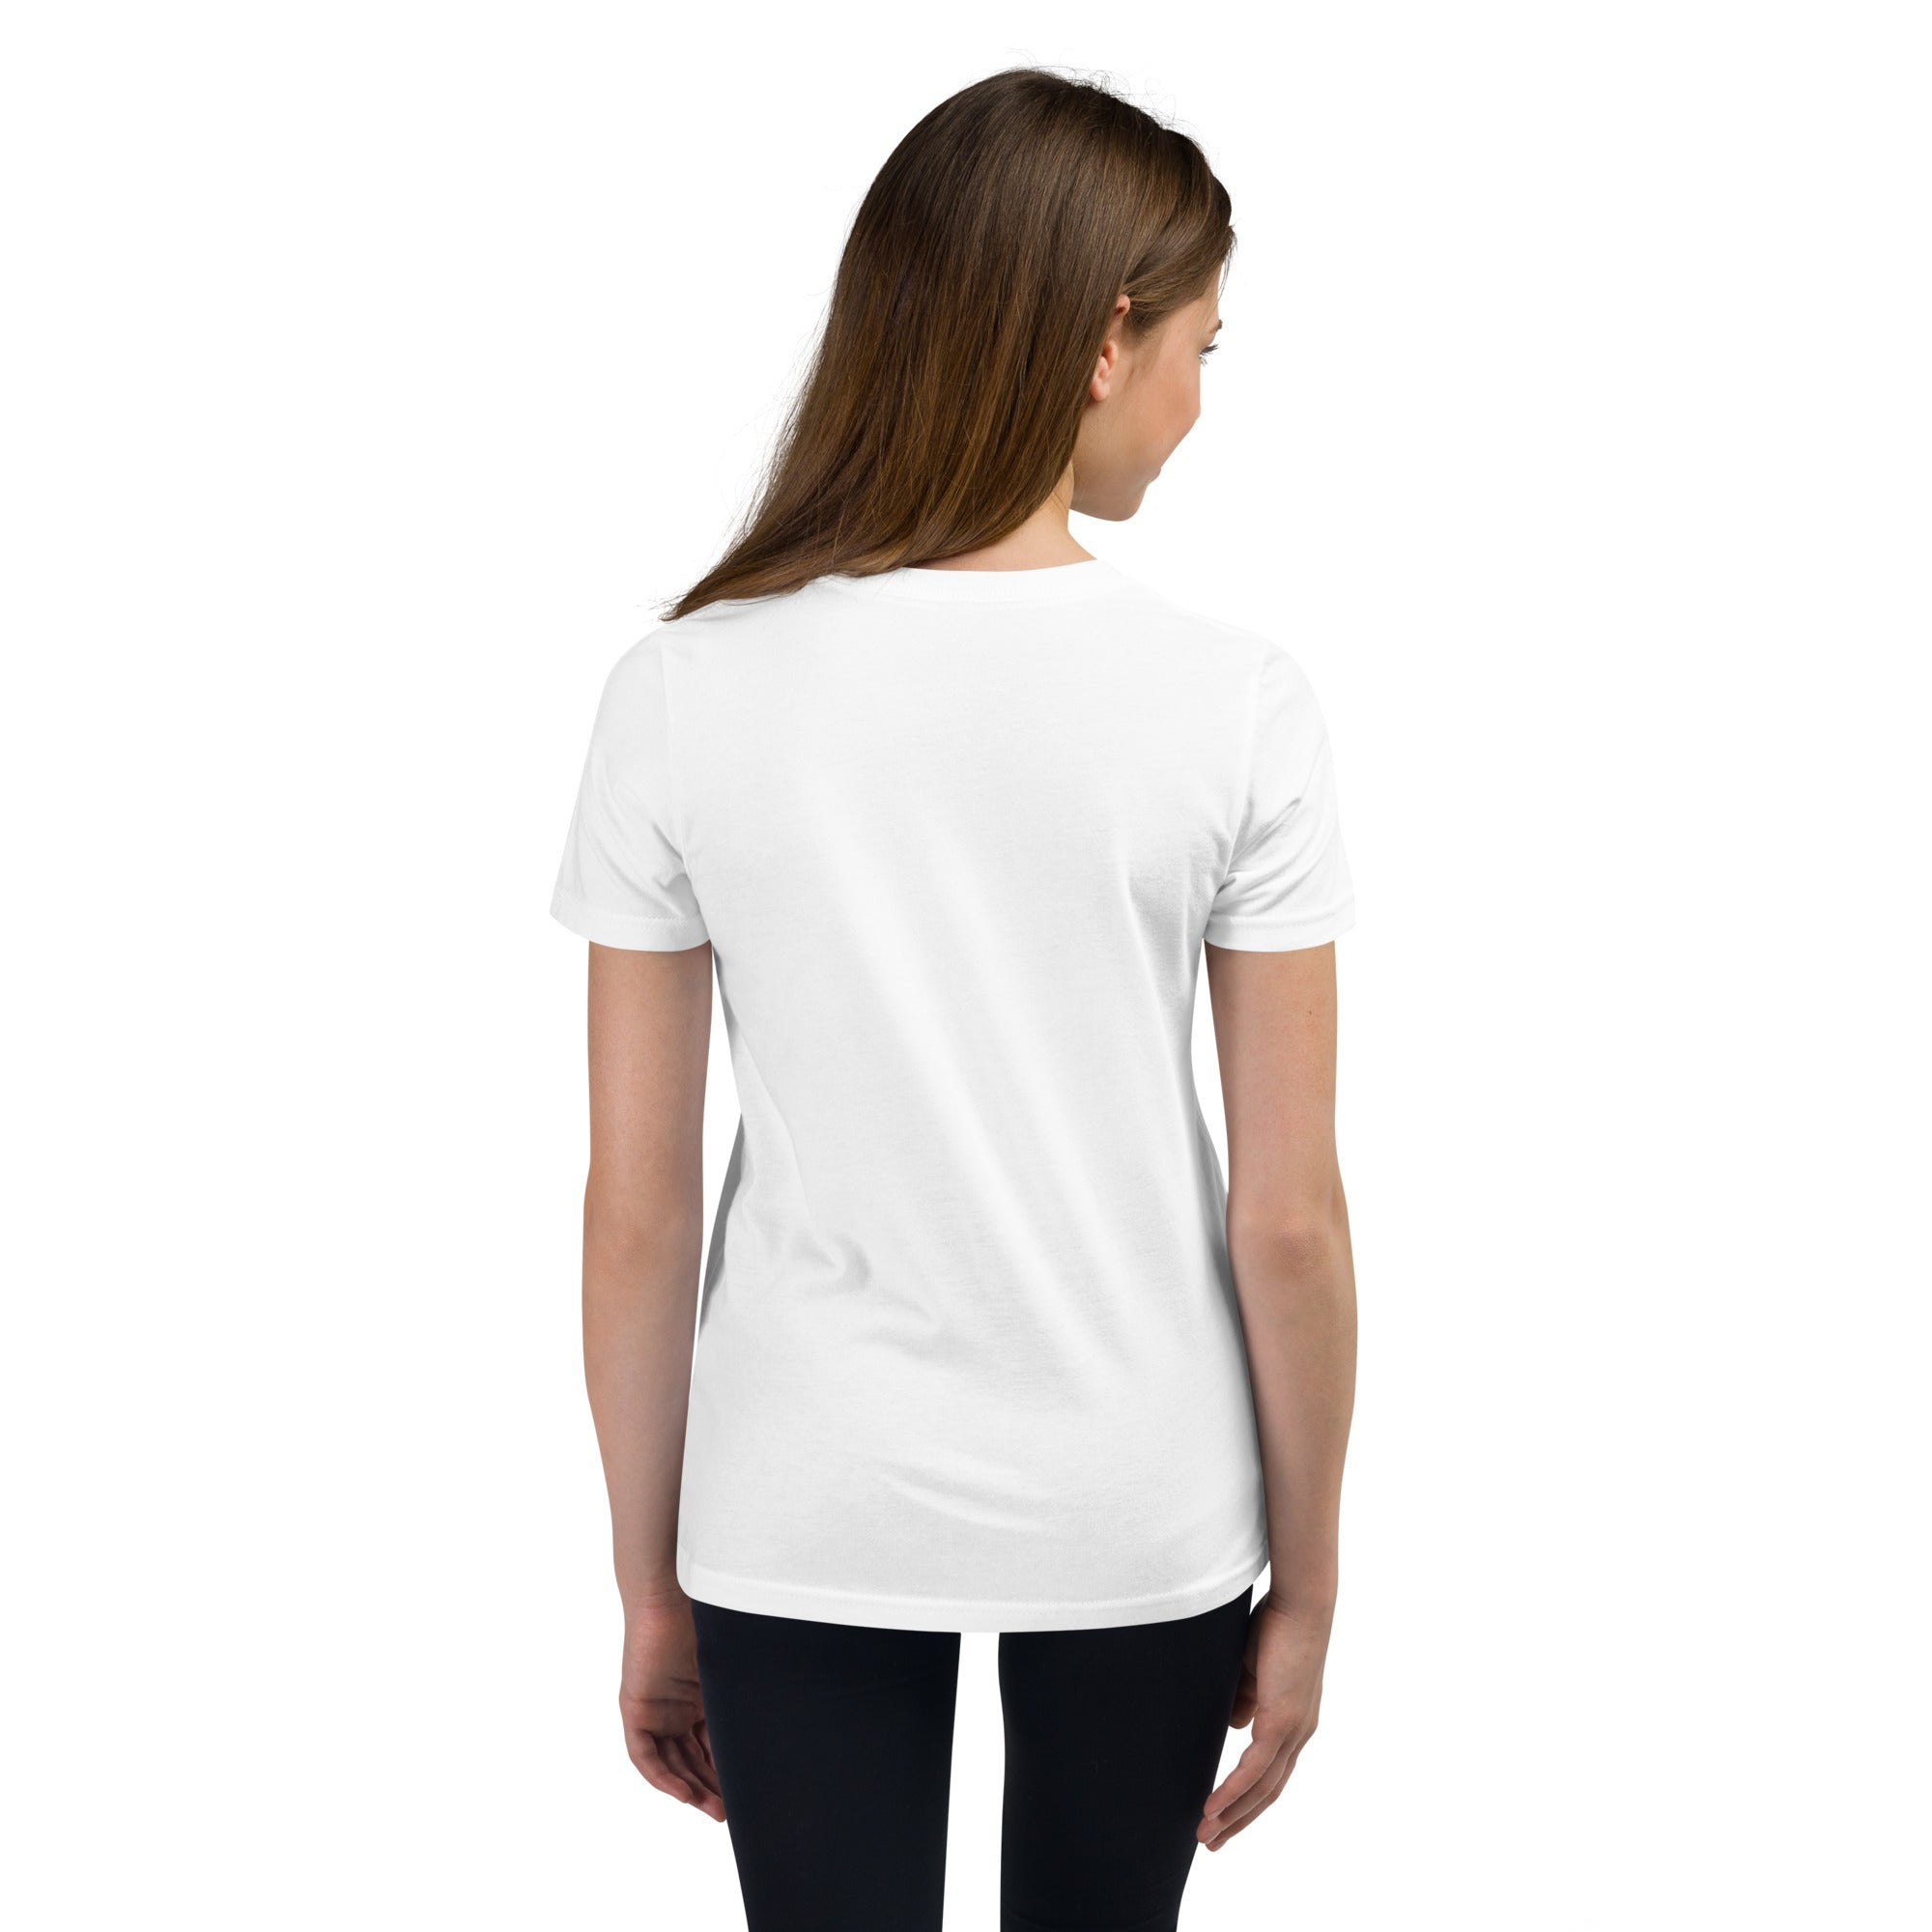 Montebello Square Logo R/B - White Youth Short Sleeve T-Shirt